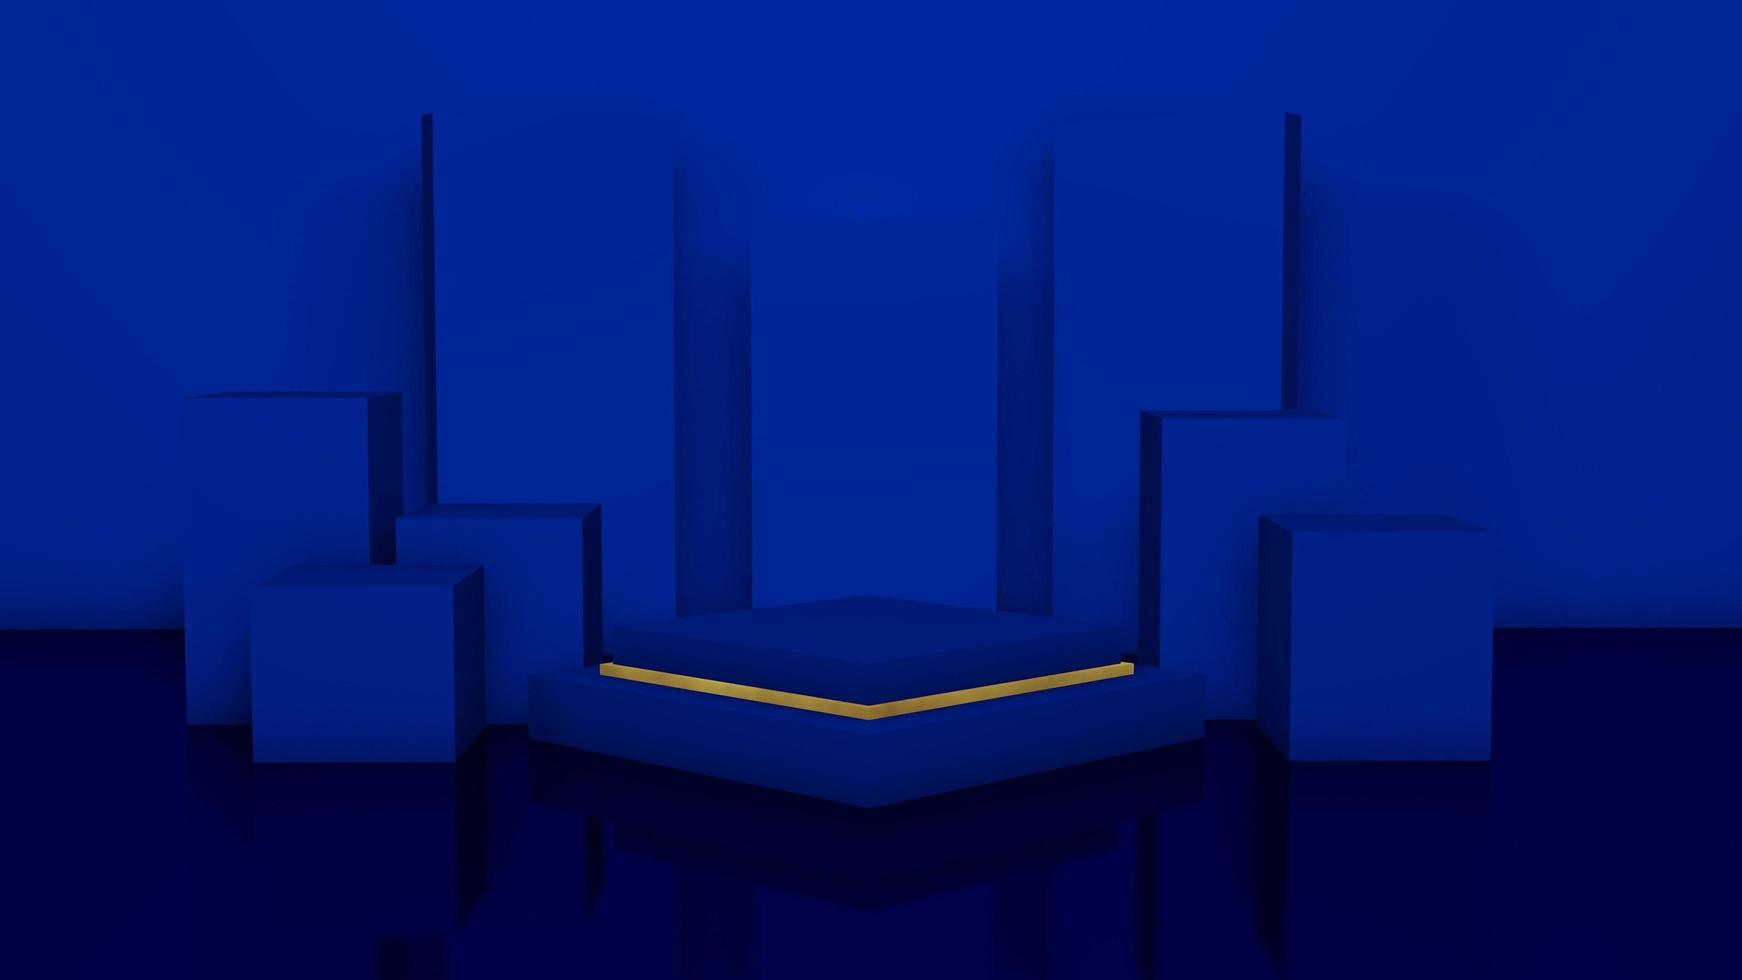 moderno blu podio design. foto